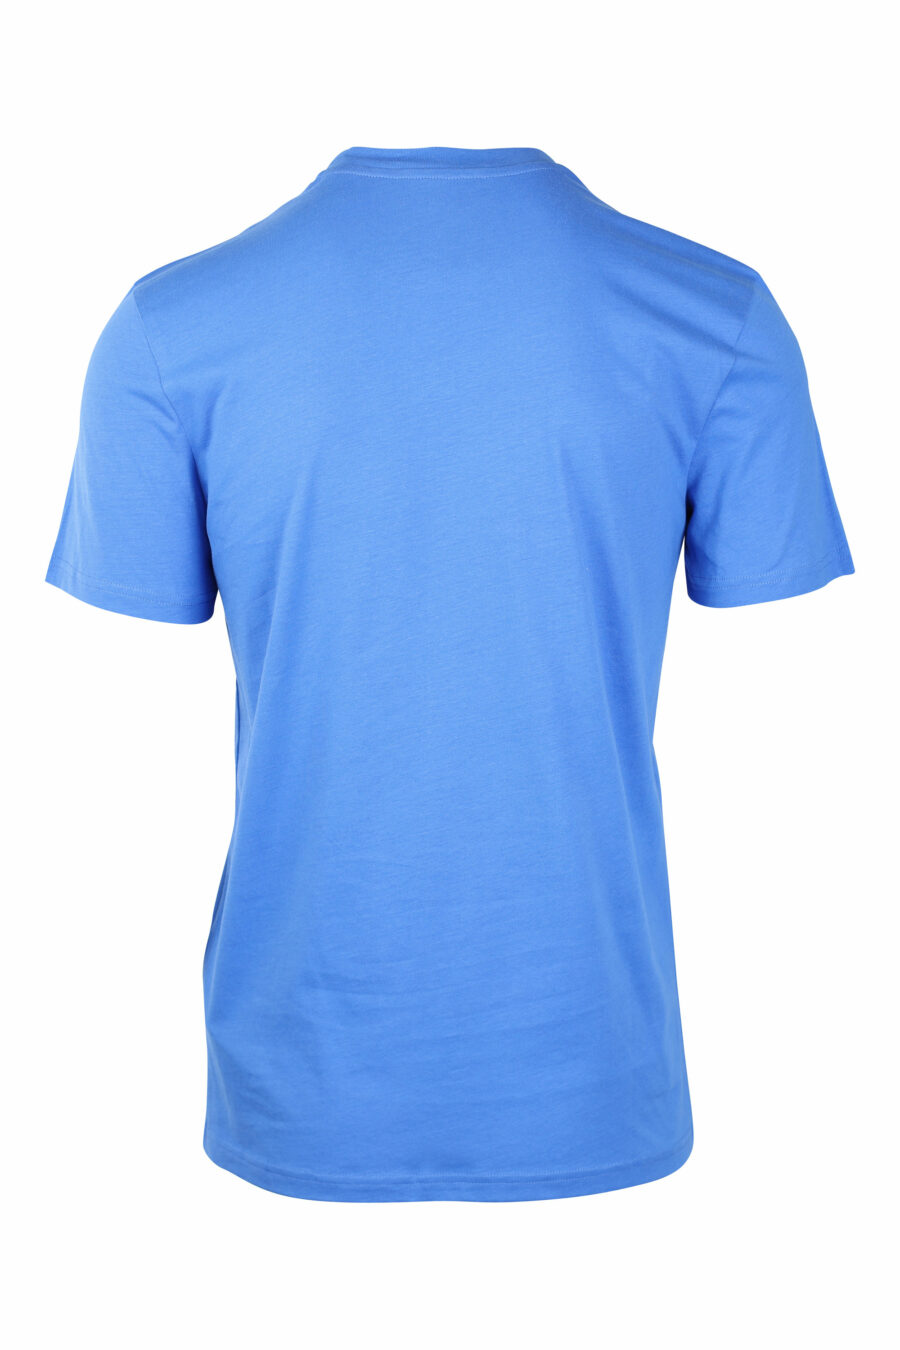 Moschino - Camiseta azul claro con maxilogo negro - BLS Fashion